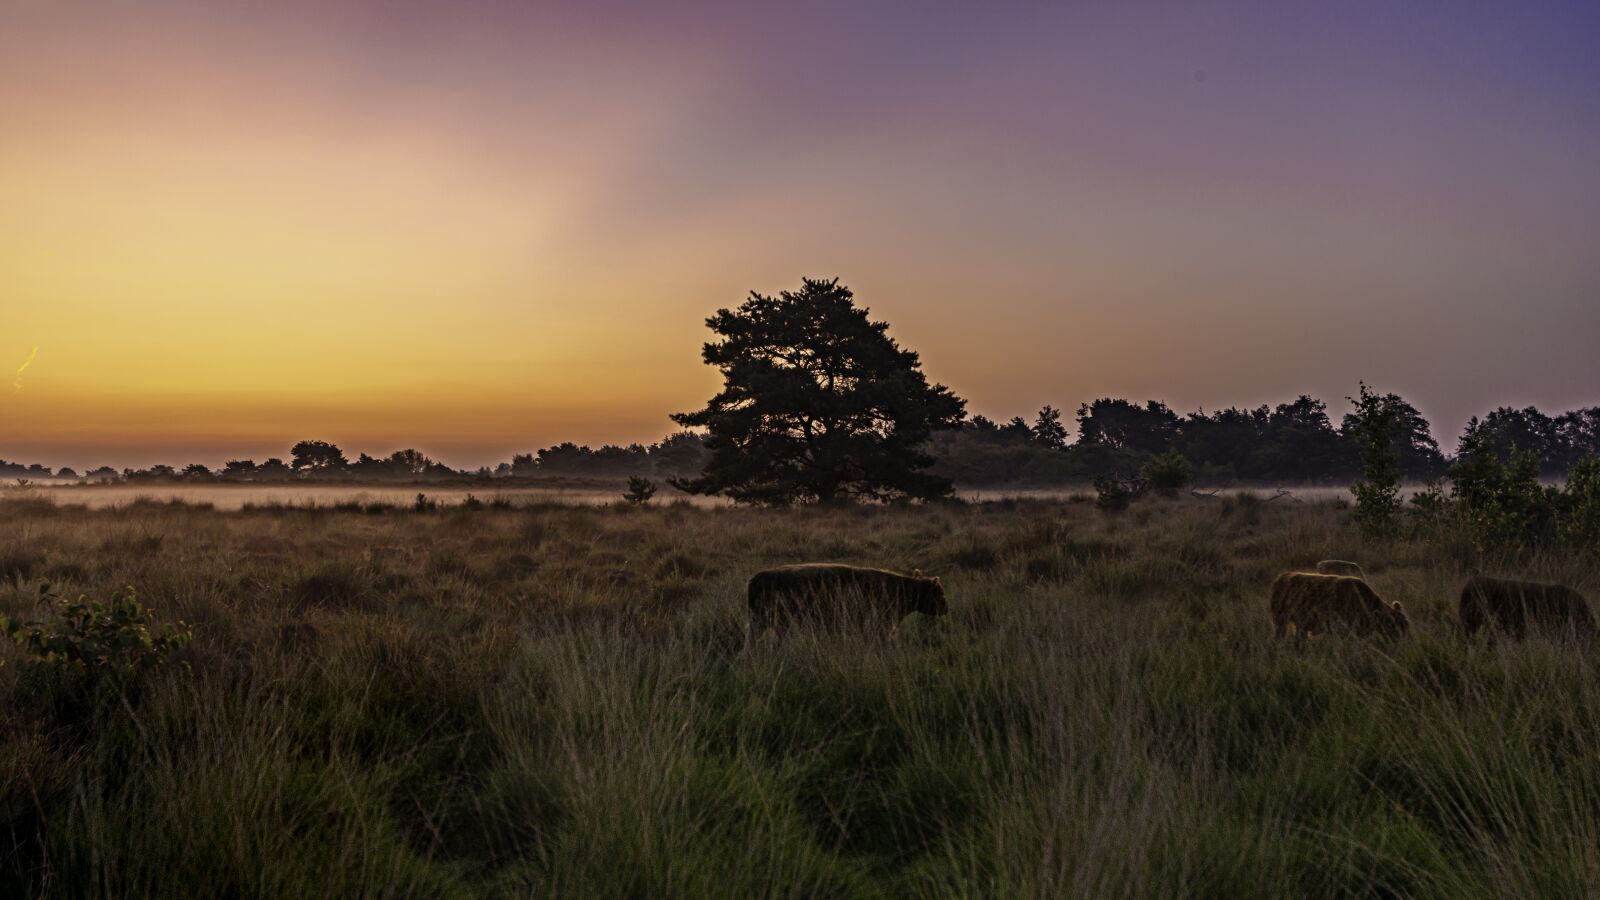 Sony a99 II sample photo. Sunrise, galoway cattle, tree photography